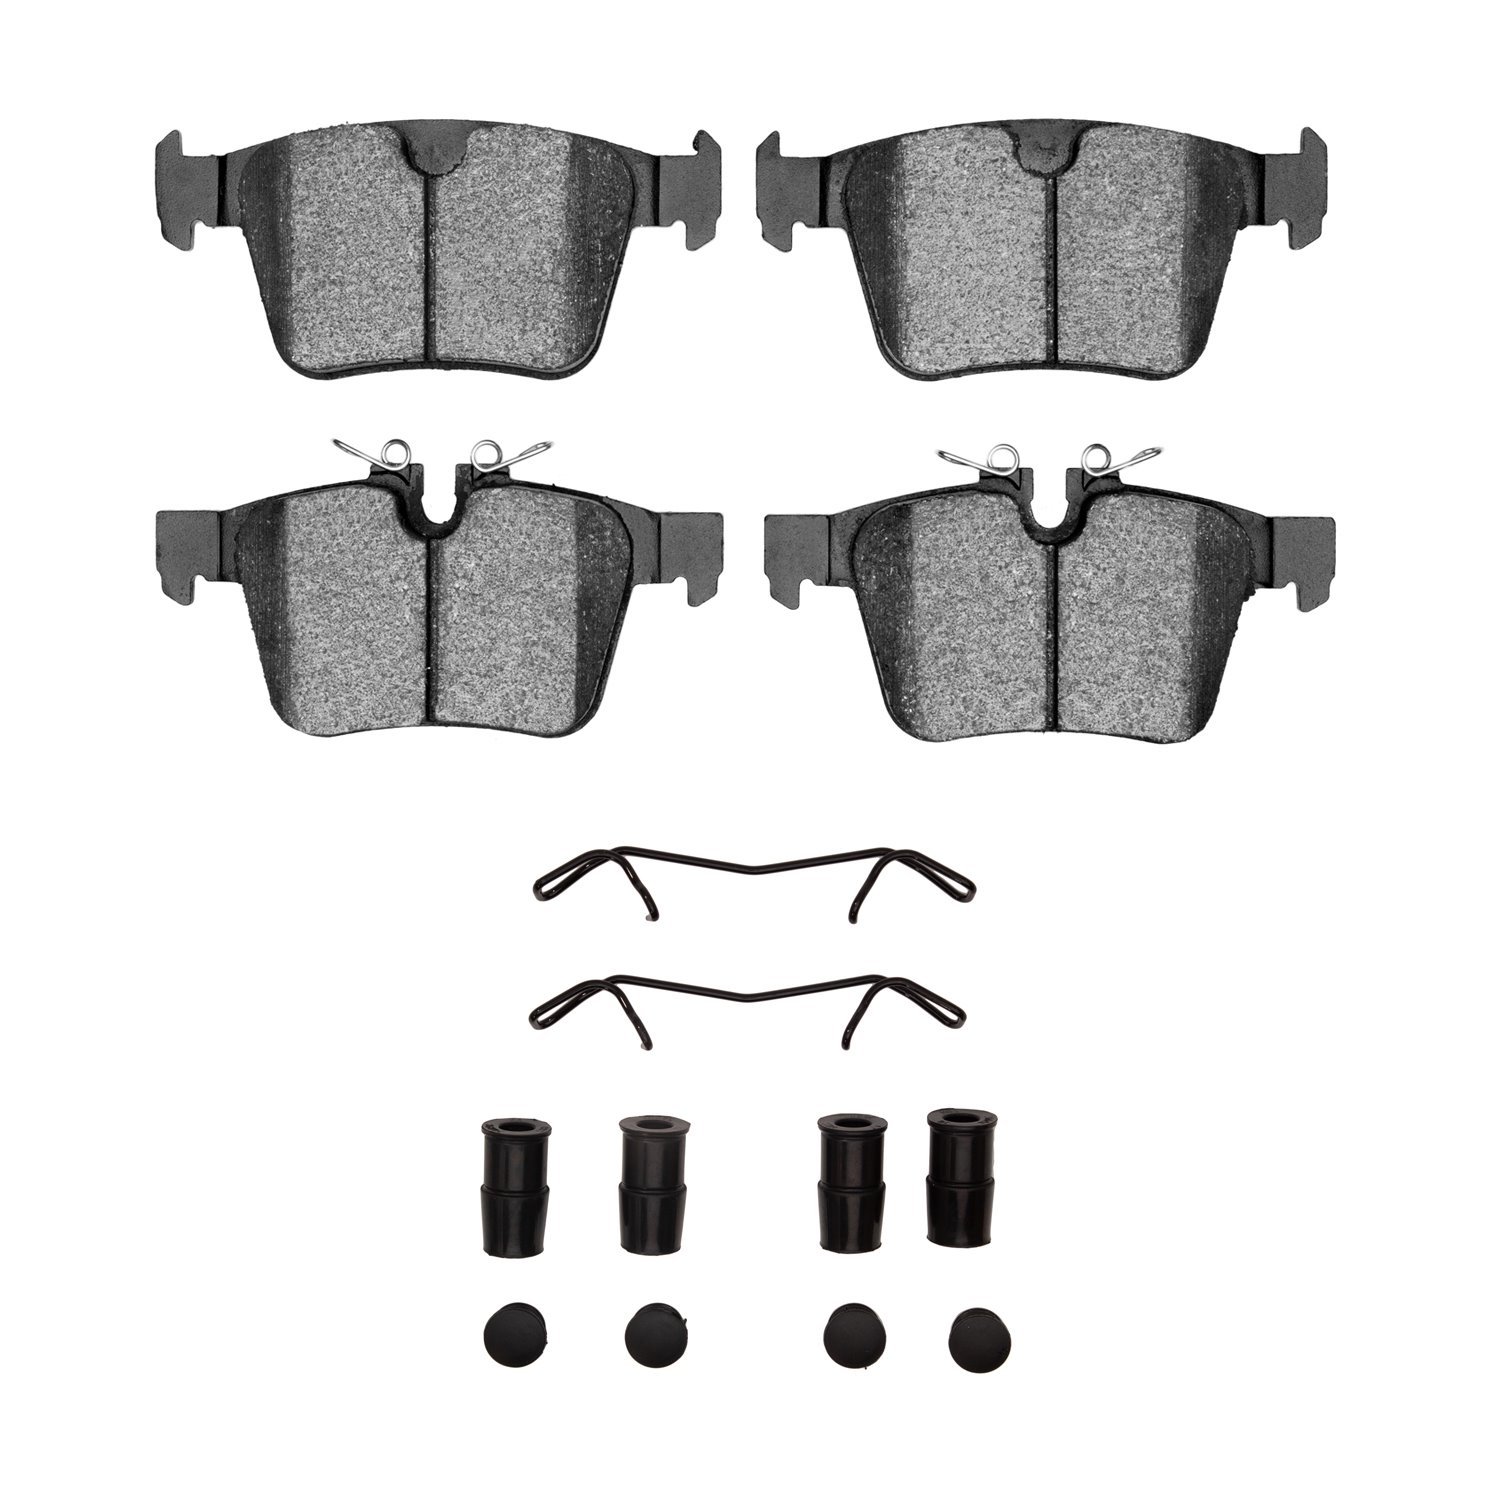 1311-1821-01 3000-Series Semi-Metallic Brake Pads & Hardware Kit, Fits Select Multiple Makes/Models, Position: Rear